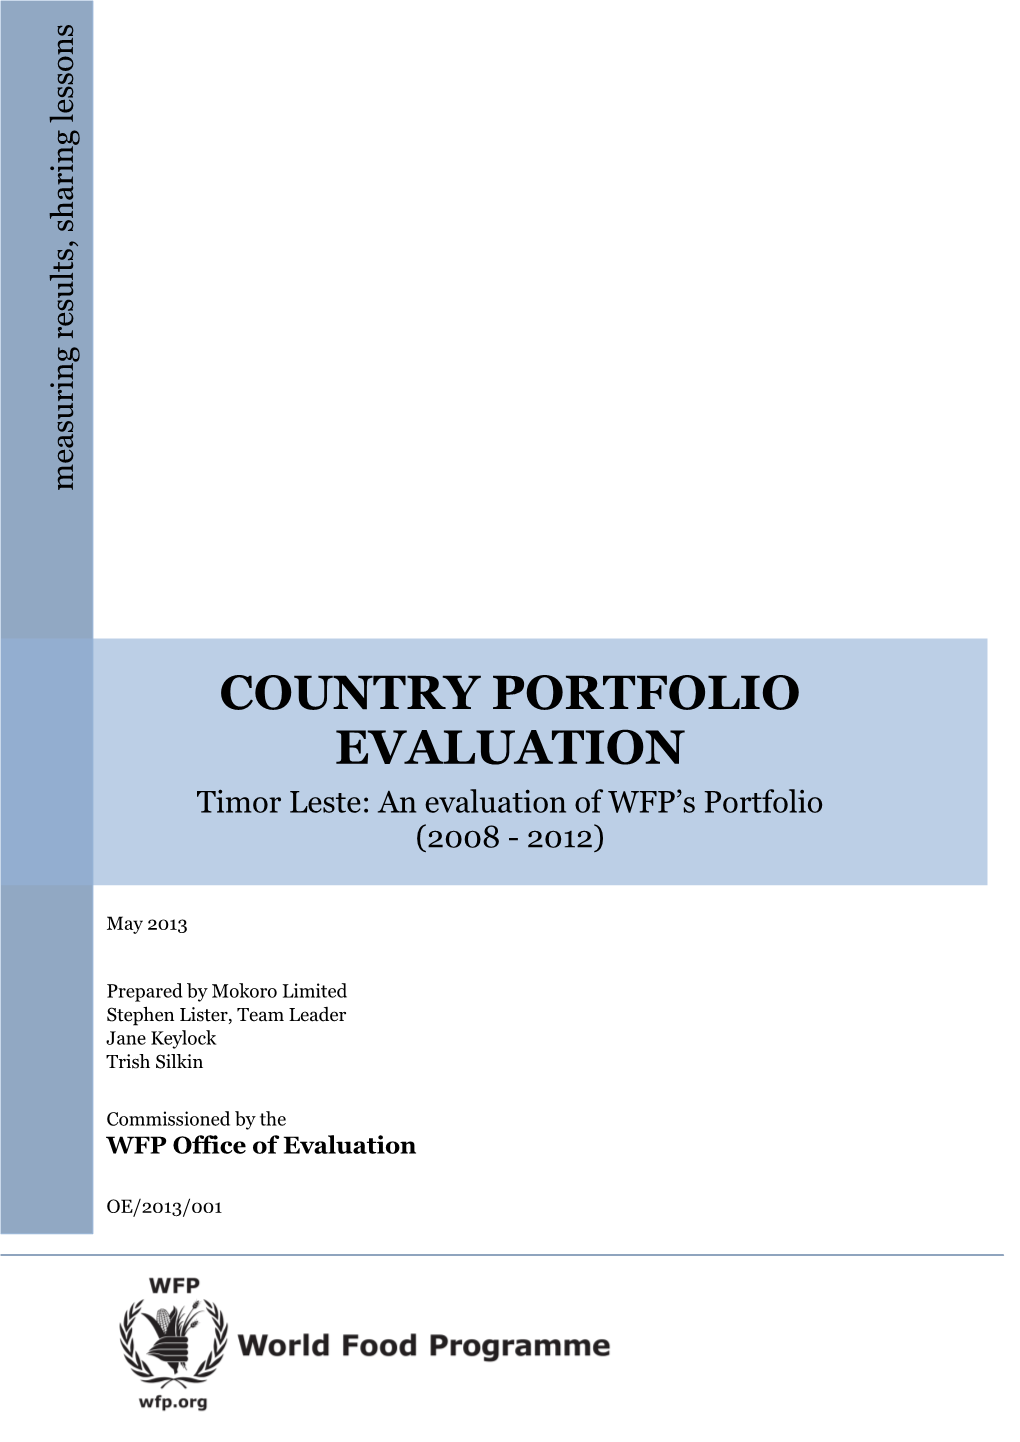 Timor Leste: an Evaluation of WFP's Portfolio (2008